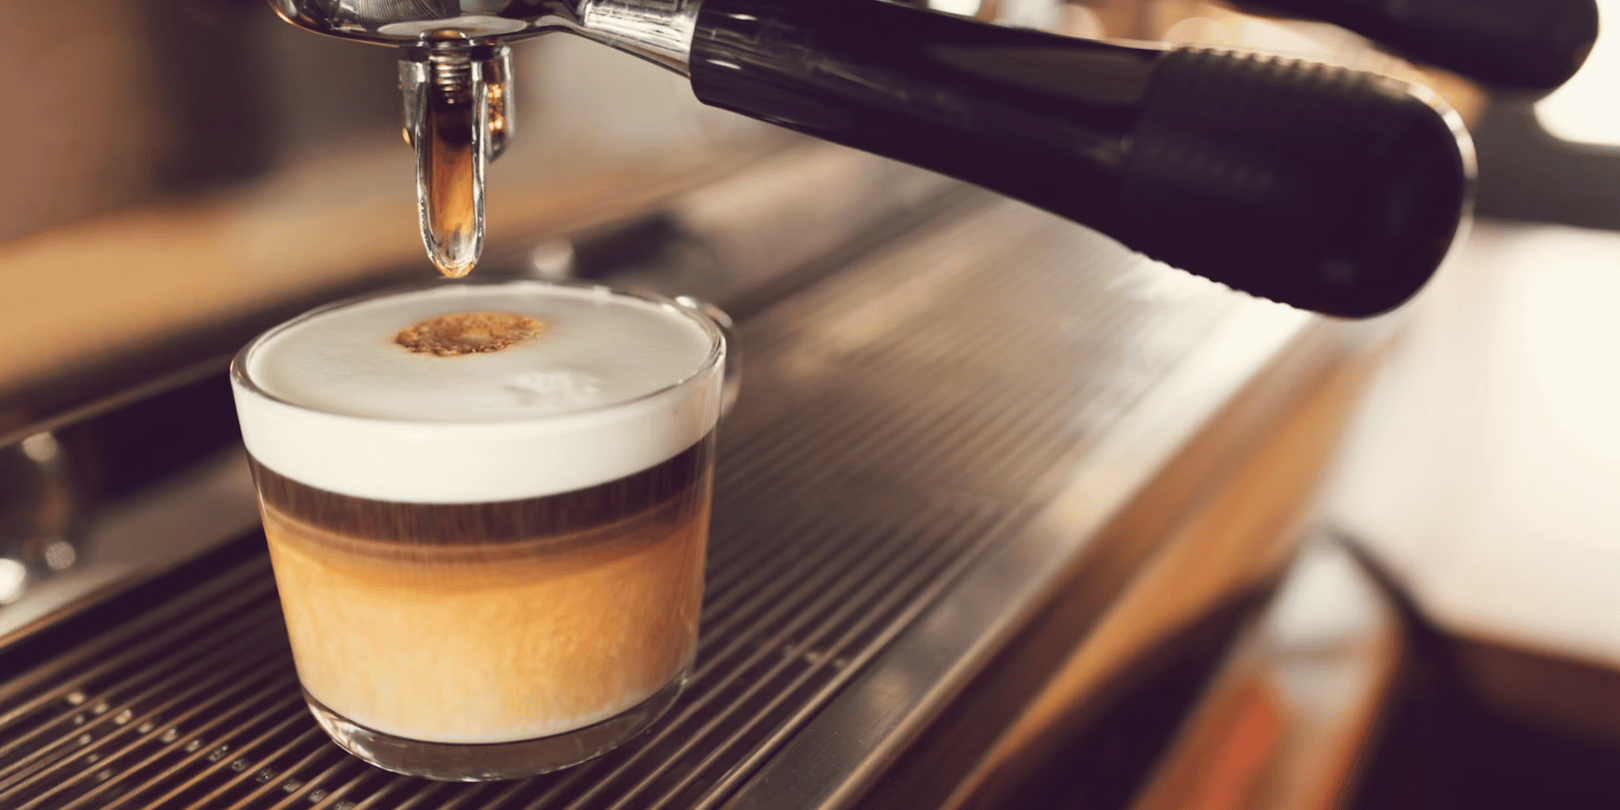 How to make naturally sweet home espresso